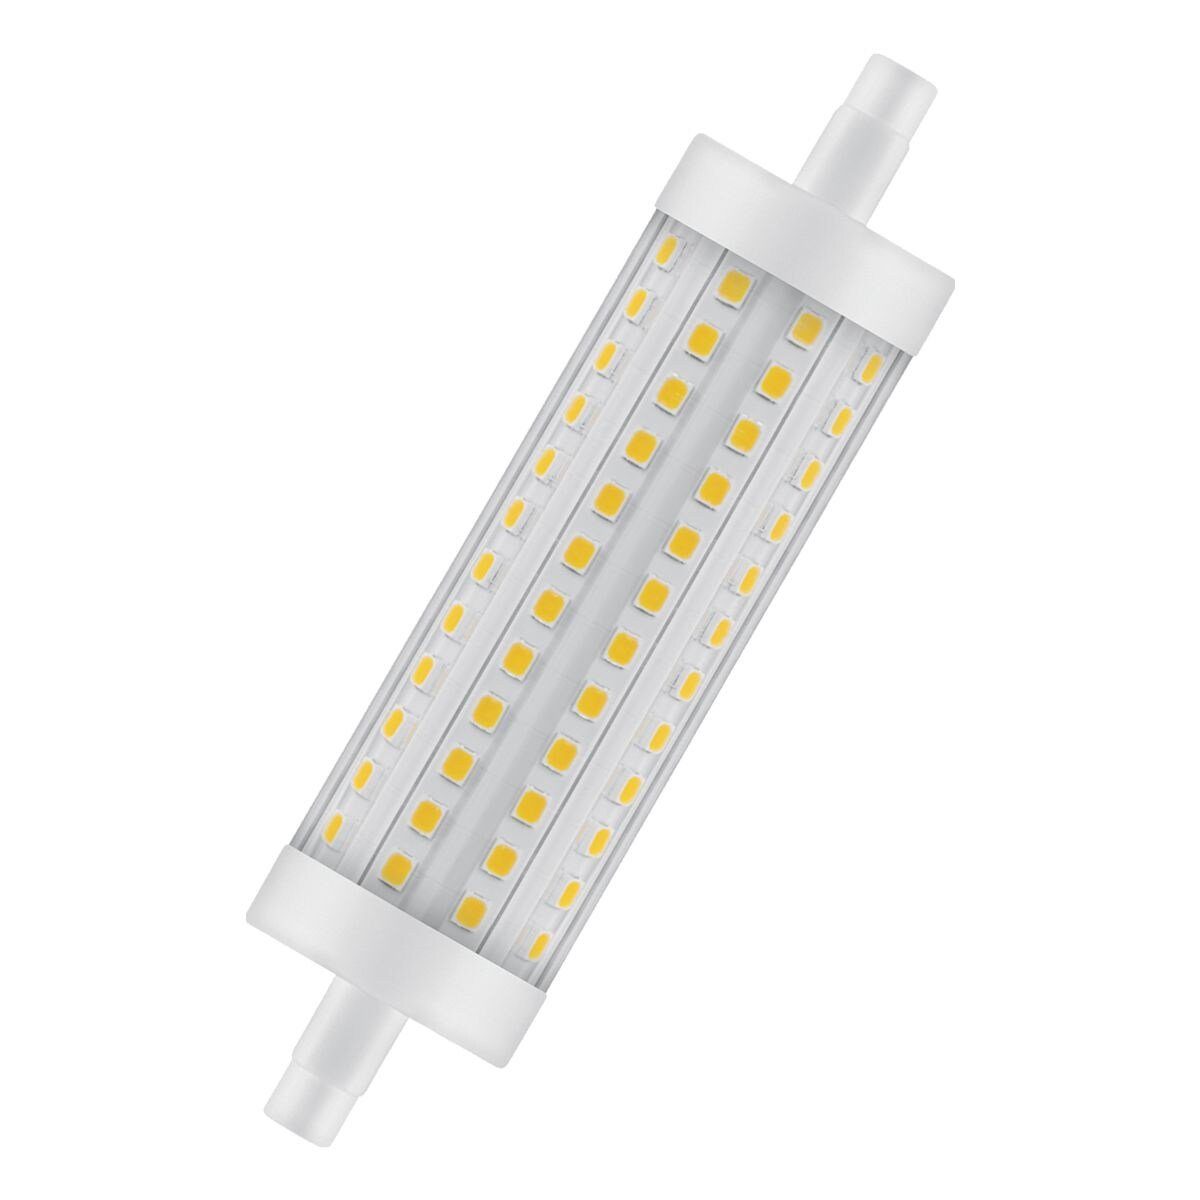 Osram LED-Leuchtmittel Line R7s dimmbar, R7s, Warm White, 15 W